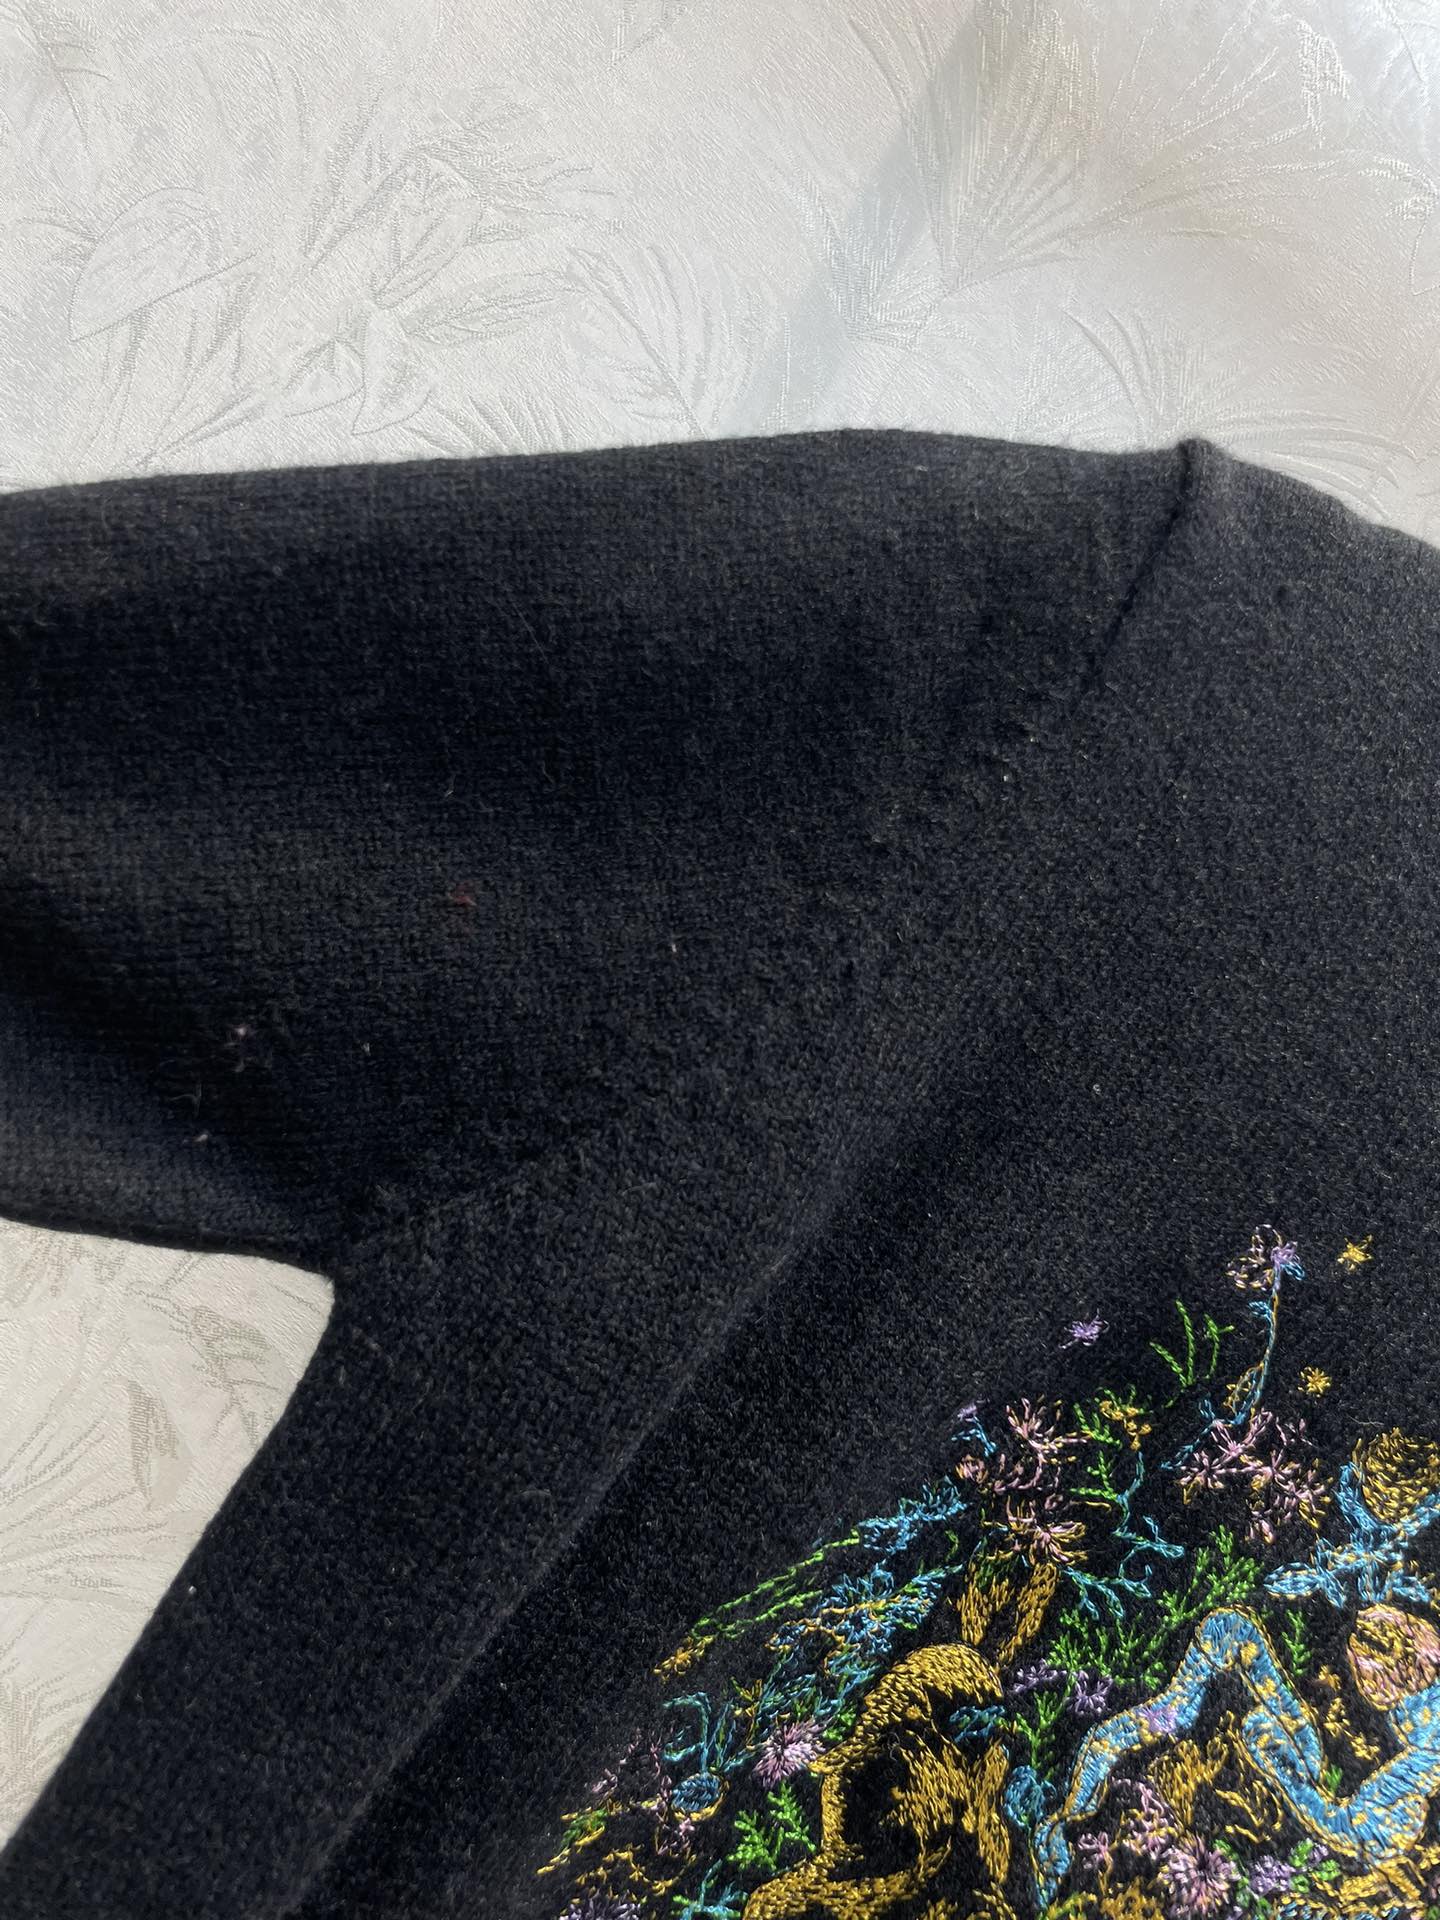 D家24新款定位丛林动物刺绣毛衣重新演绎经典单品进口纱线质量超赞嵌花编织森林动物图案刺绣工艺超美经典圆领